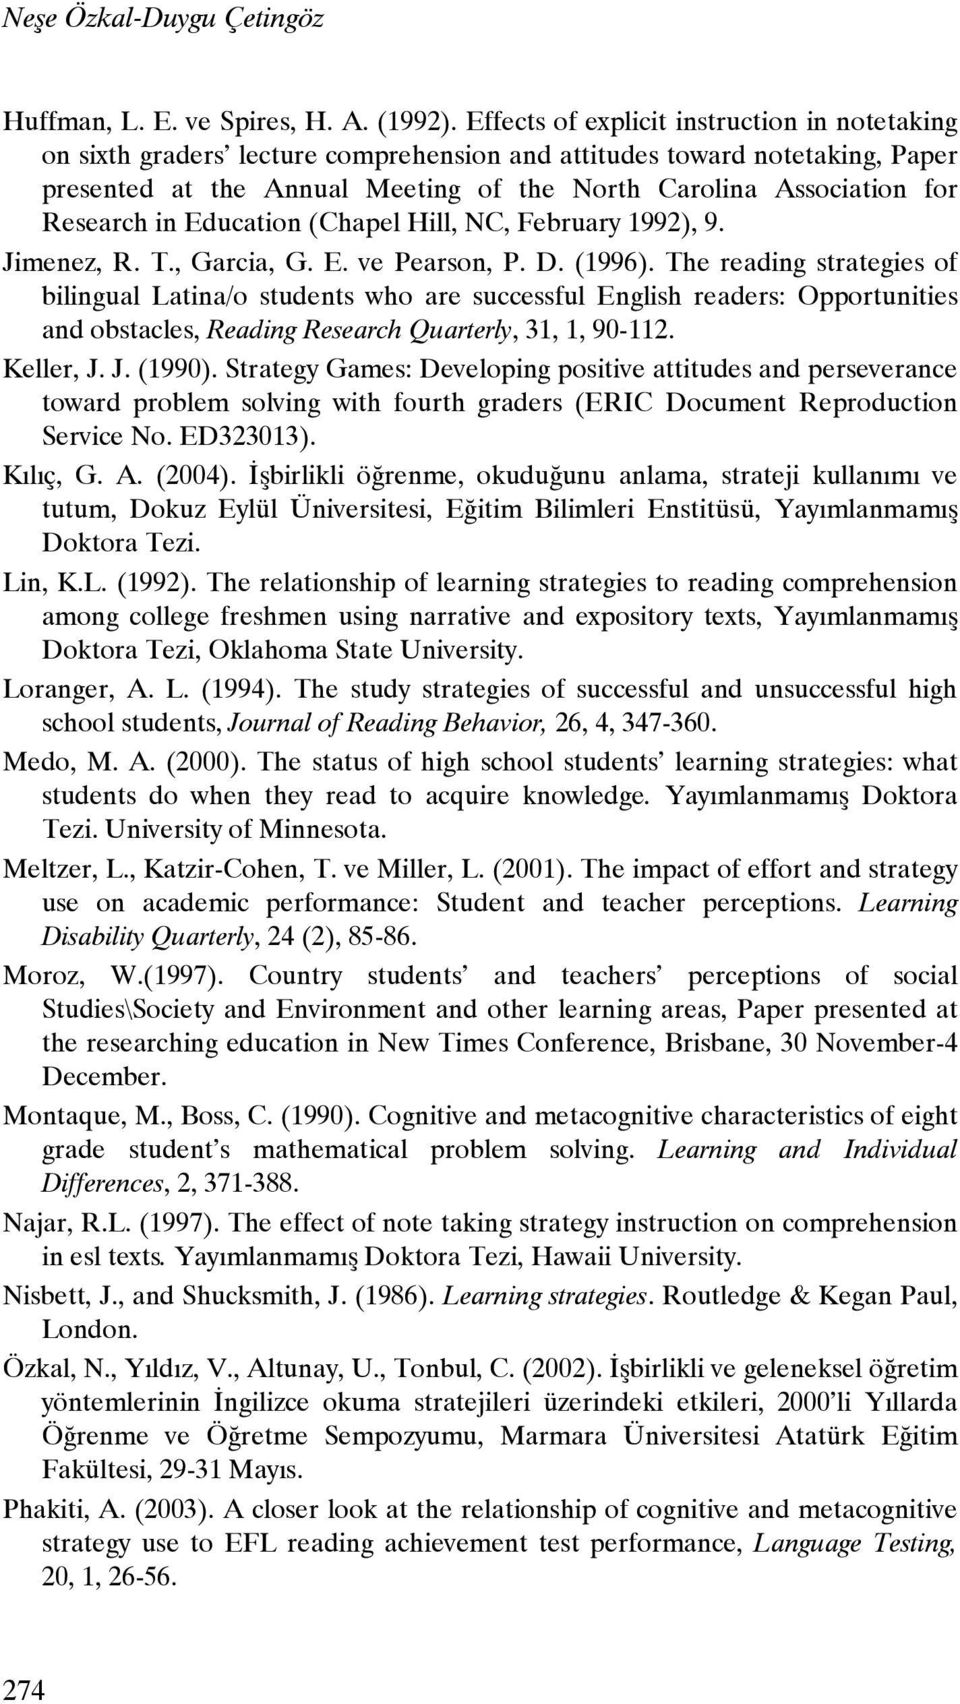 Research in Education (Chapel Hill, NC, February 1992), 9. Jimenez, R. T., Garcia, G. E. ve Pearson, P. D. (1996).